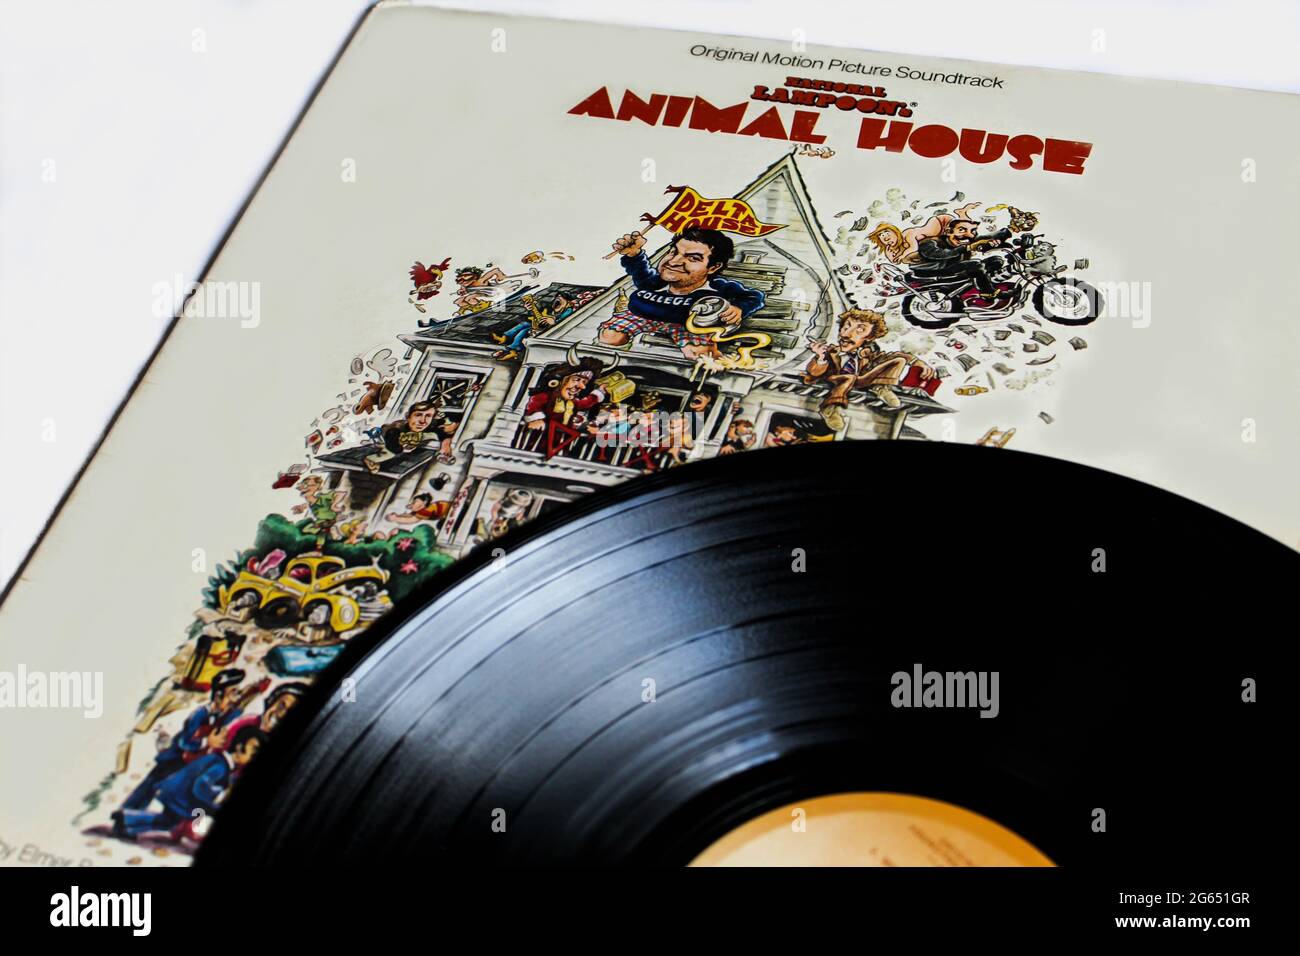 National Lampoon's Animal House Original Motion Picture Soundtrack-Musikalbum auf Vinyl-Schallplatte. Klassischer Film. Albumcover Stockfoto